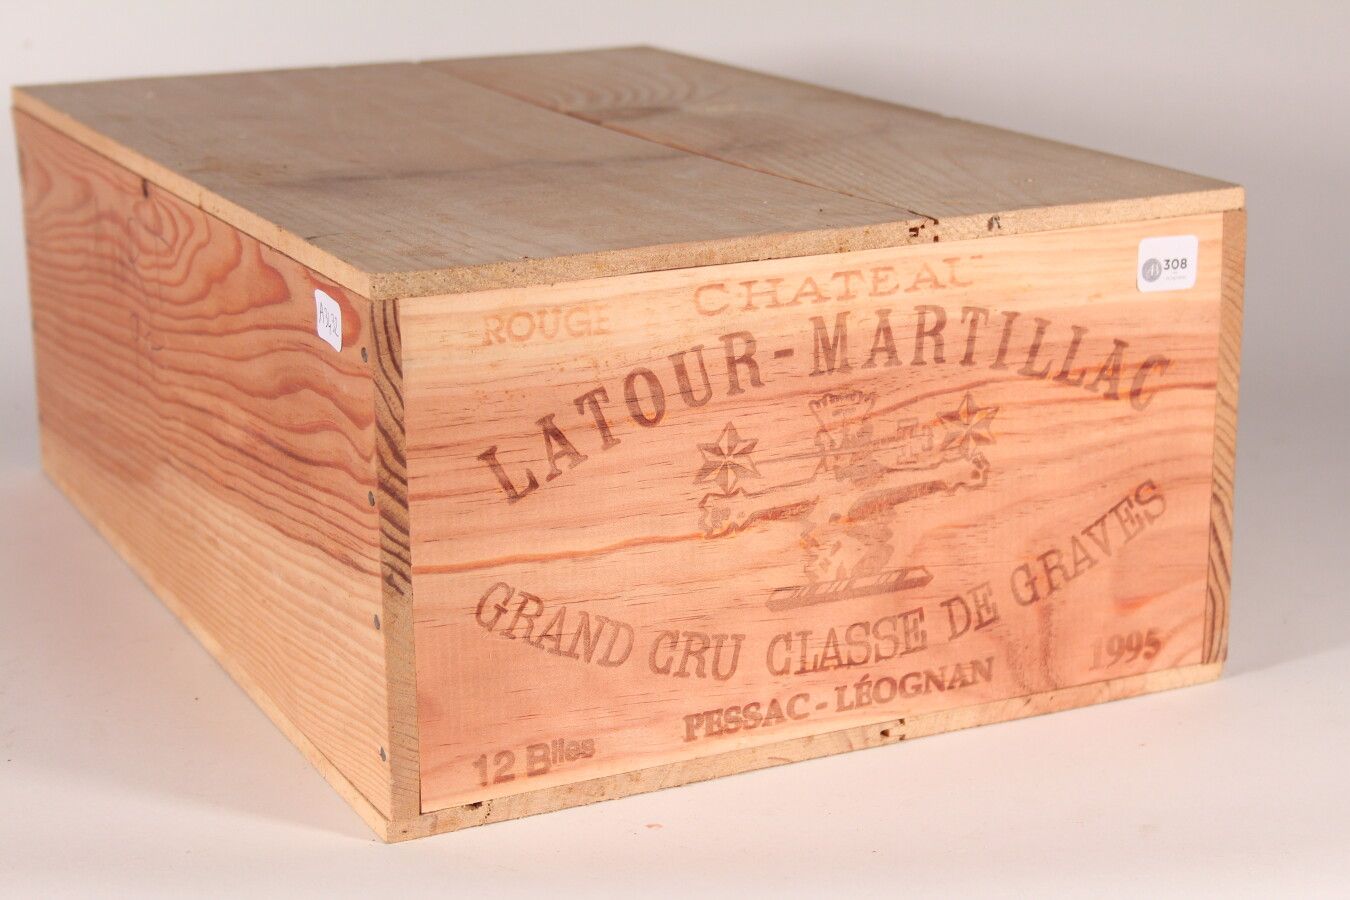 Null 1995 - Château Latour Martillac

Pessac-Léognan - 12 bottiglie